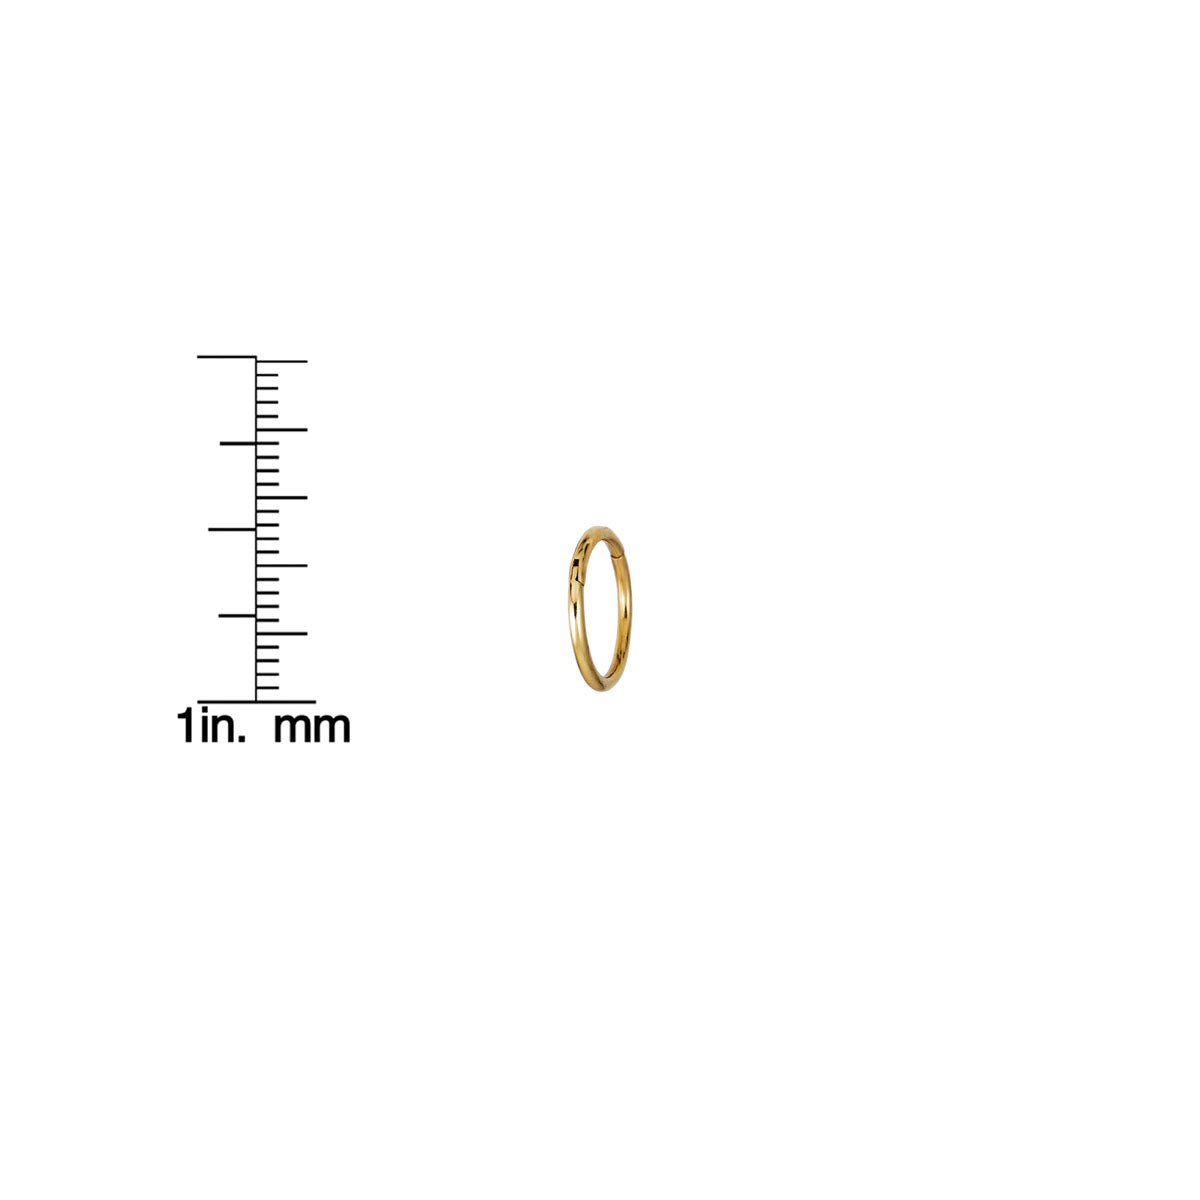 12mm infinity gold hoop earring sizing_155c3ac2 8f51 41a9 b554 92bd1466b9a7